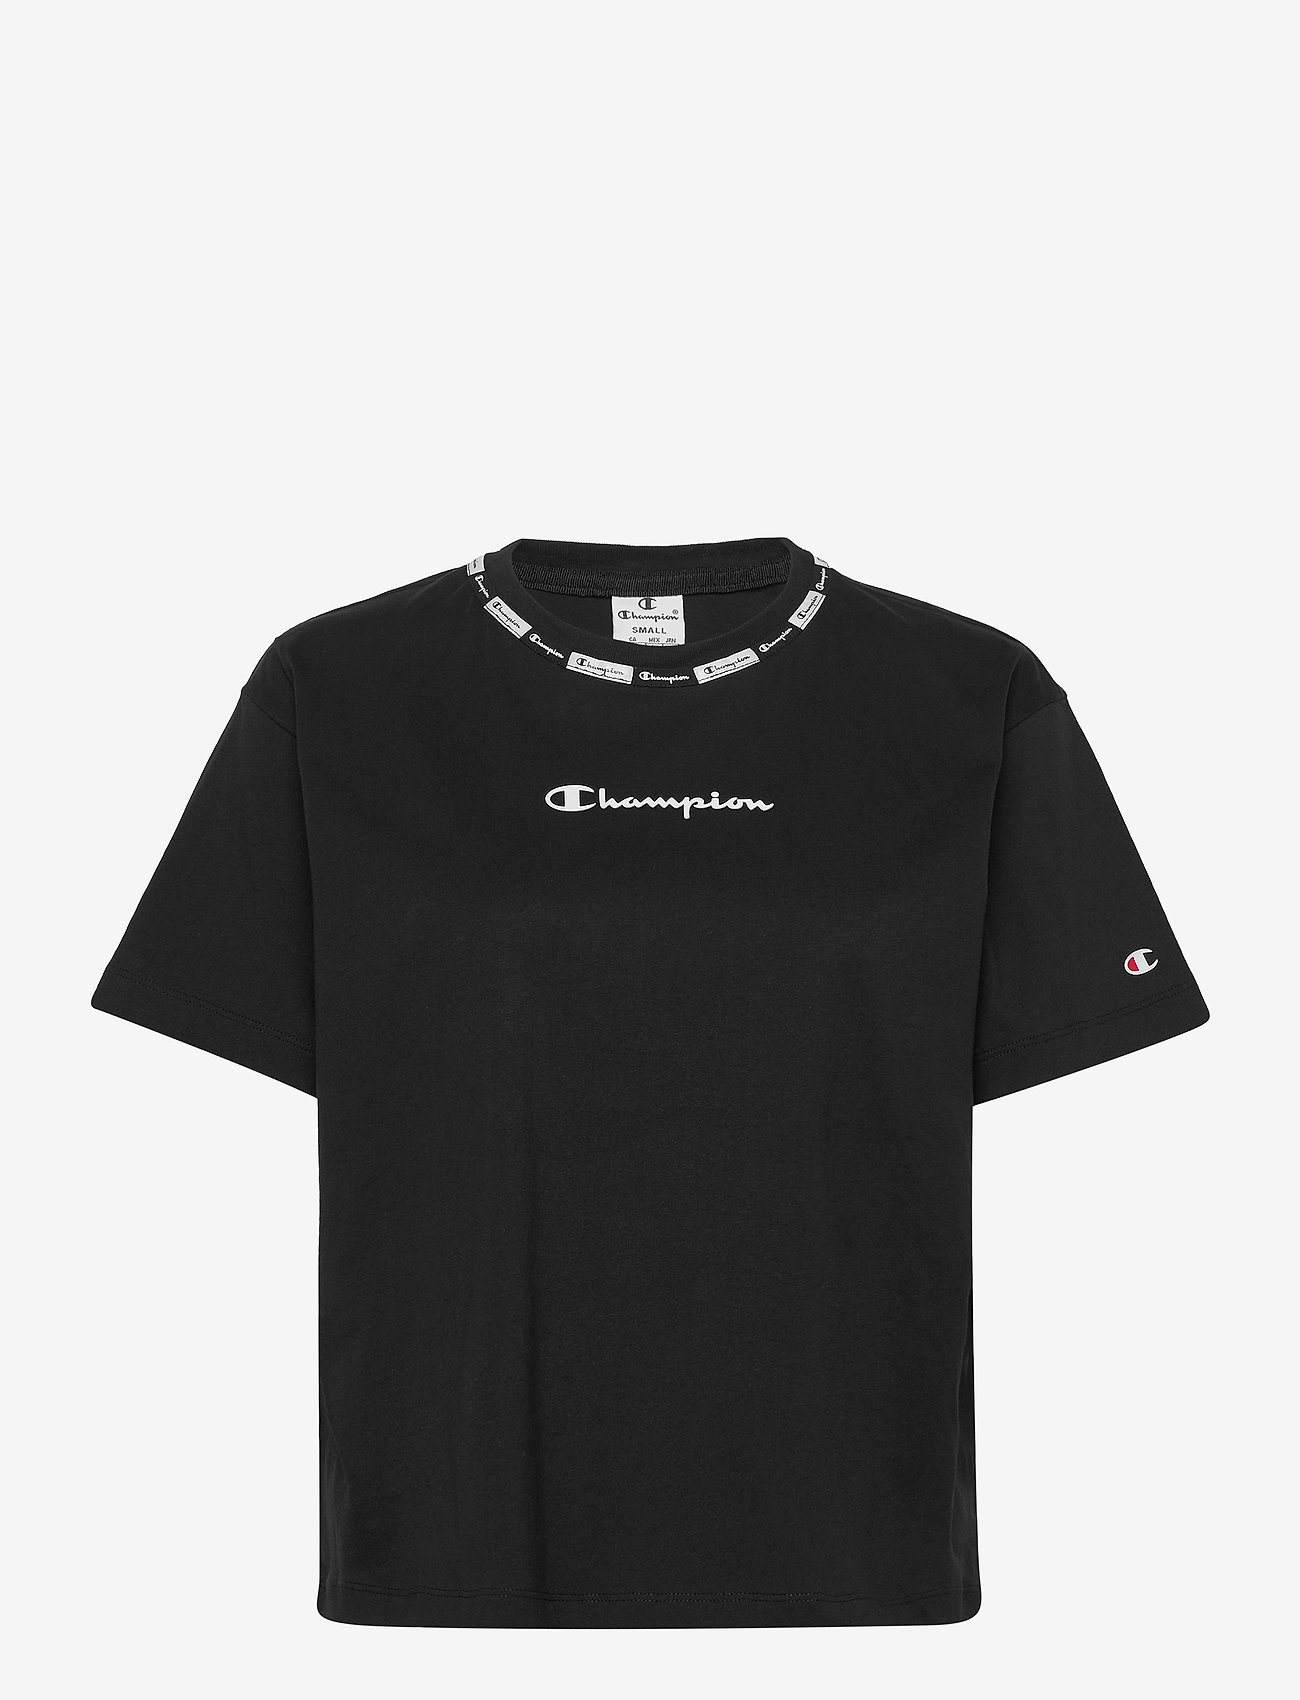 Crewneck T-shirt (Black Beauty) (19.50 